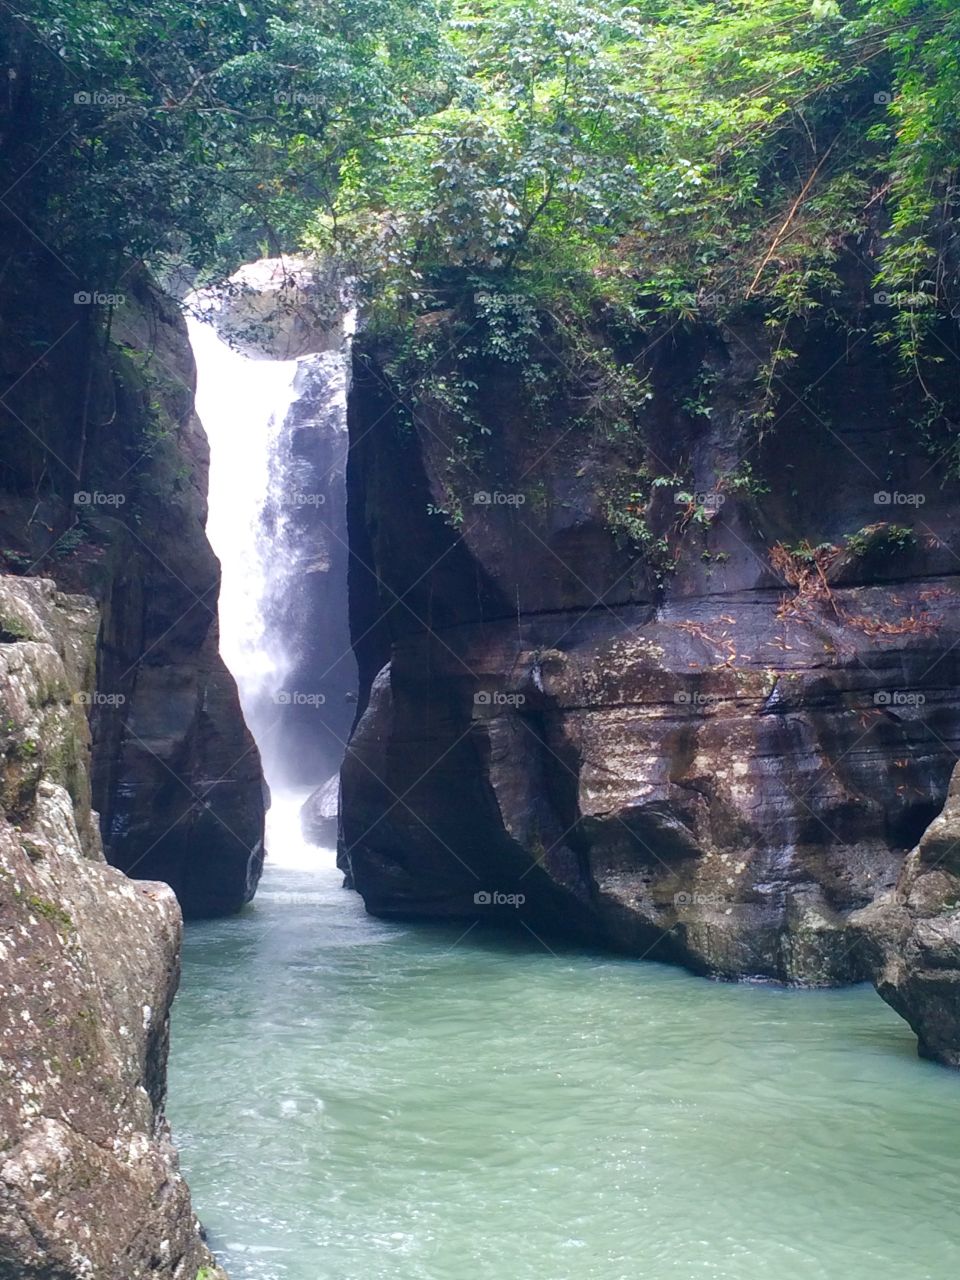 Indonesia waterfalls 